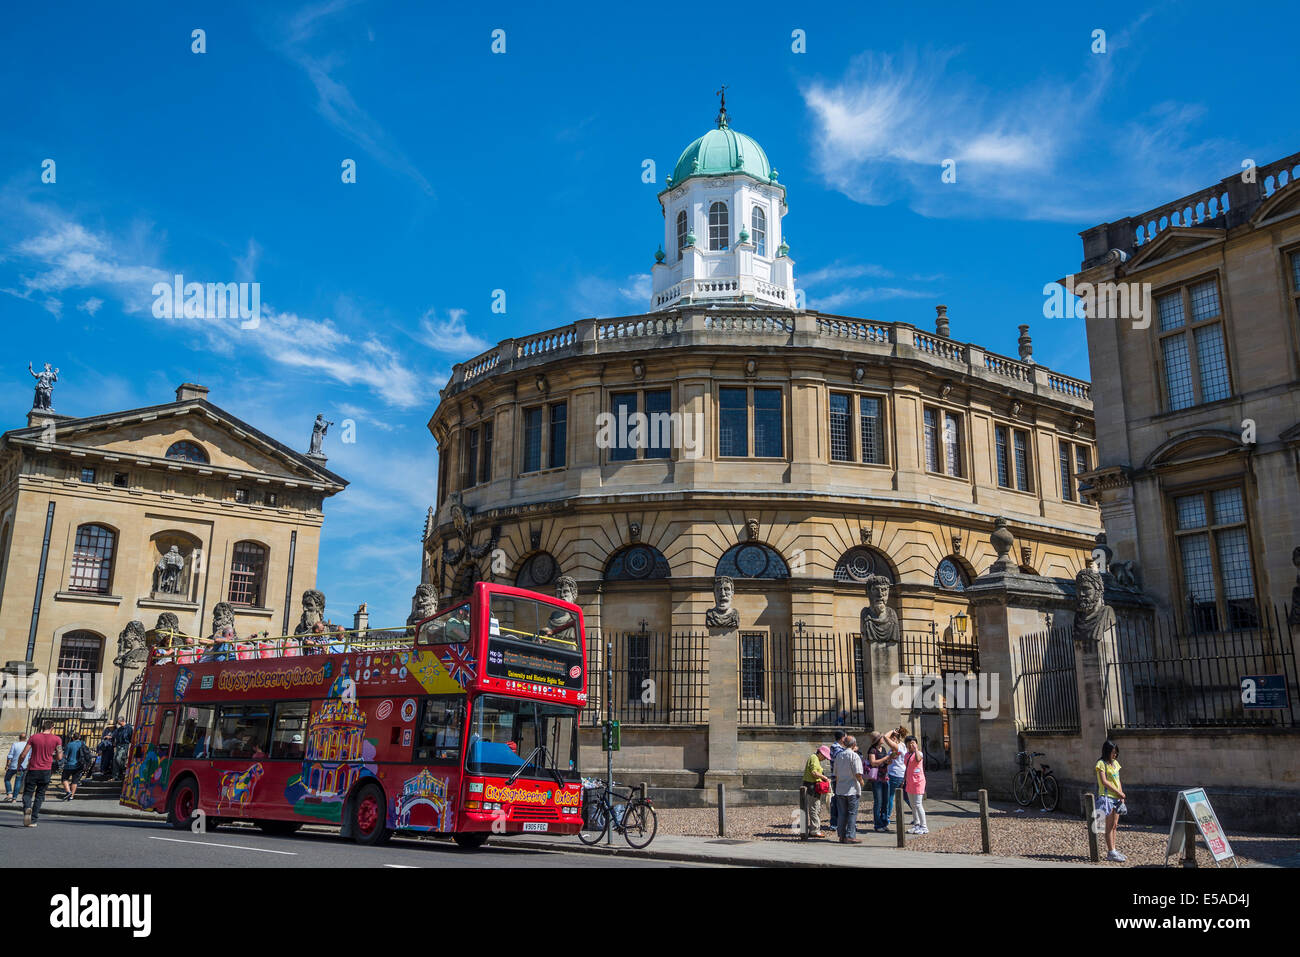 Sightseeing bus touristique en face de Sheldonian Theatre, Broad Street, Oxford, England, UK Banque D'Images